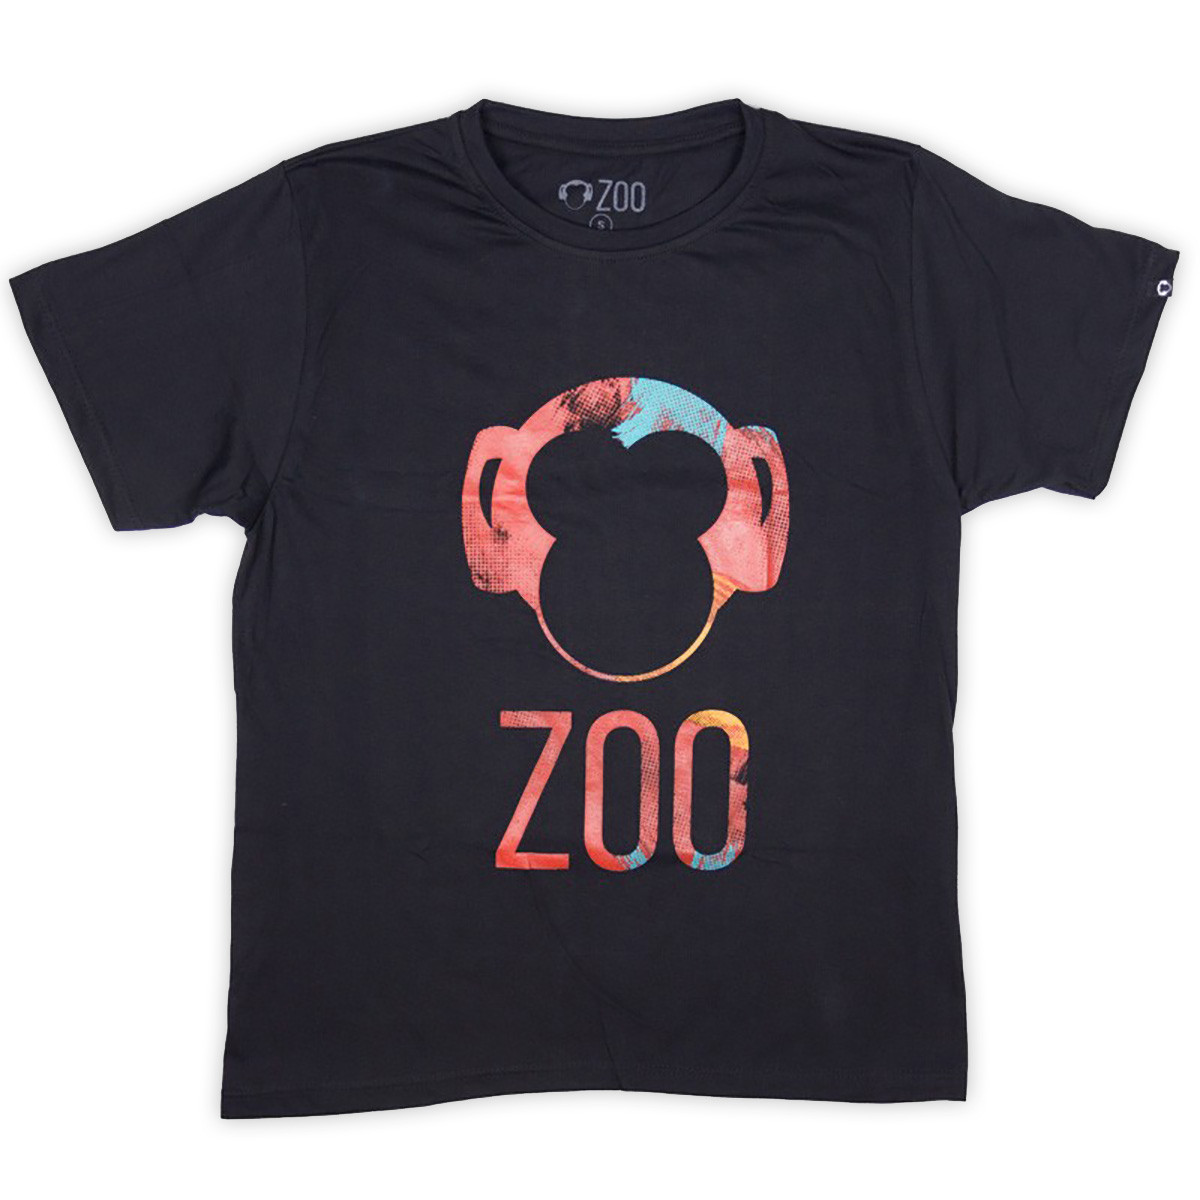 jugo Confiar Justicia Camiseta Raval colores Zoo